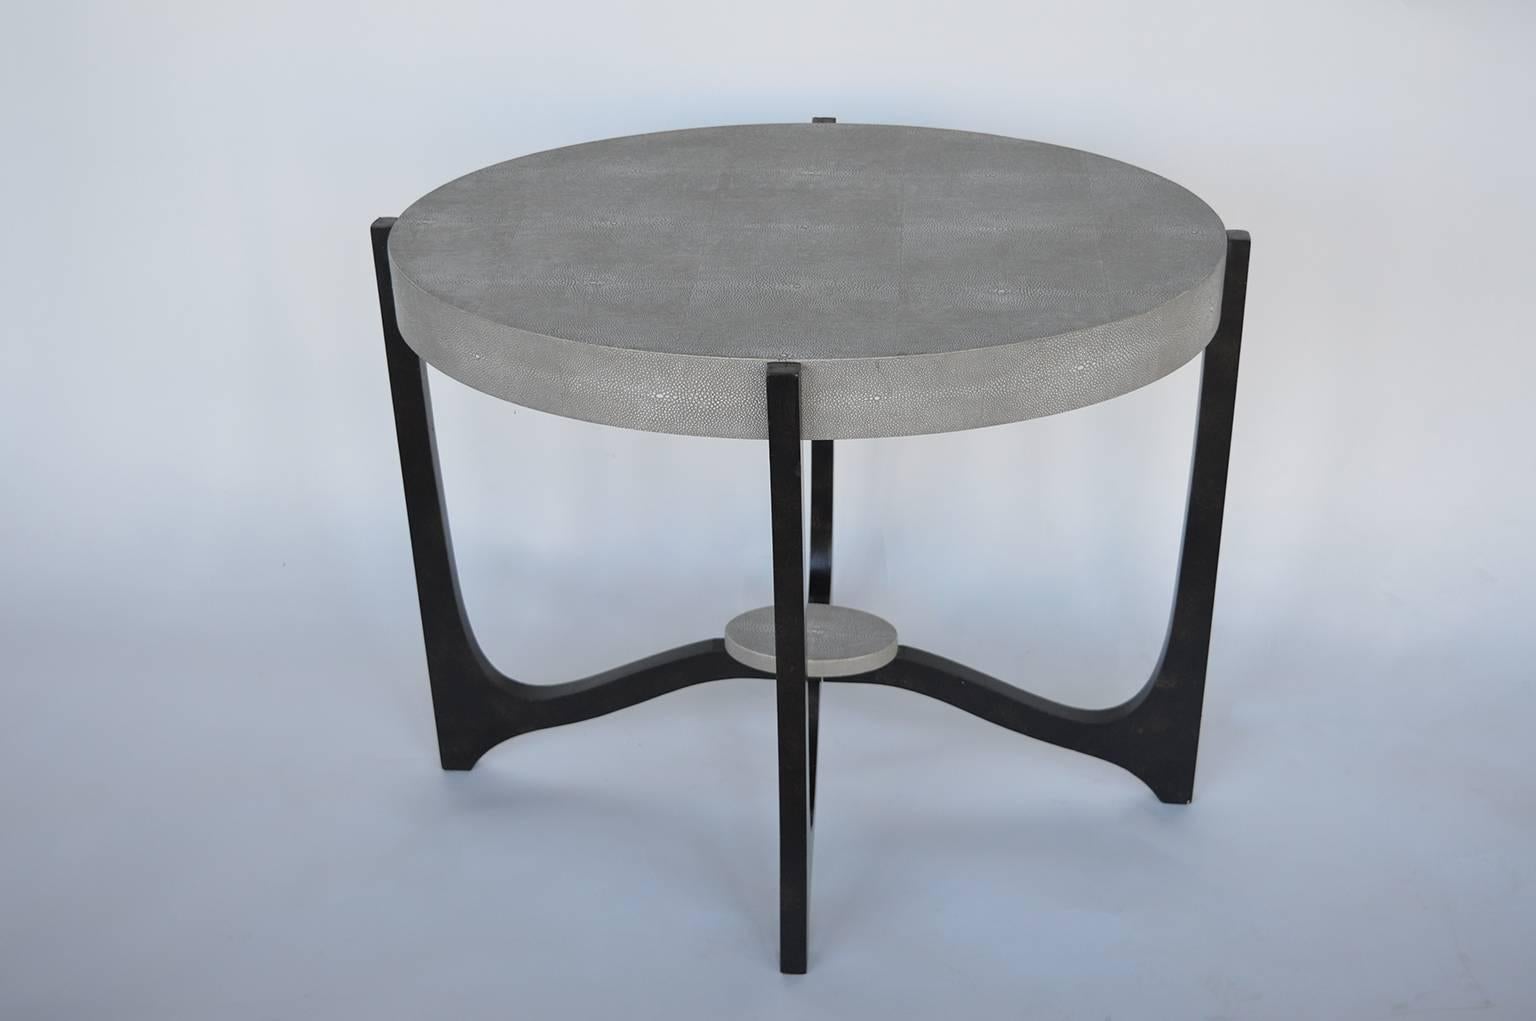 Grey shagreen side table with ebonized legs.